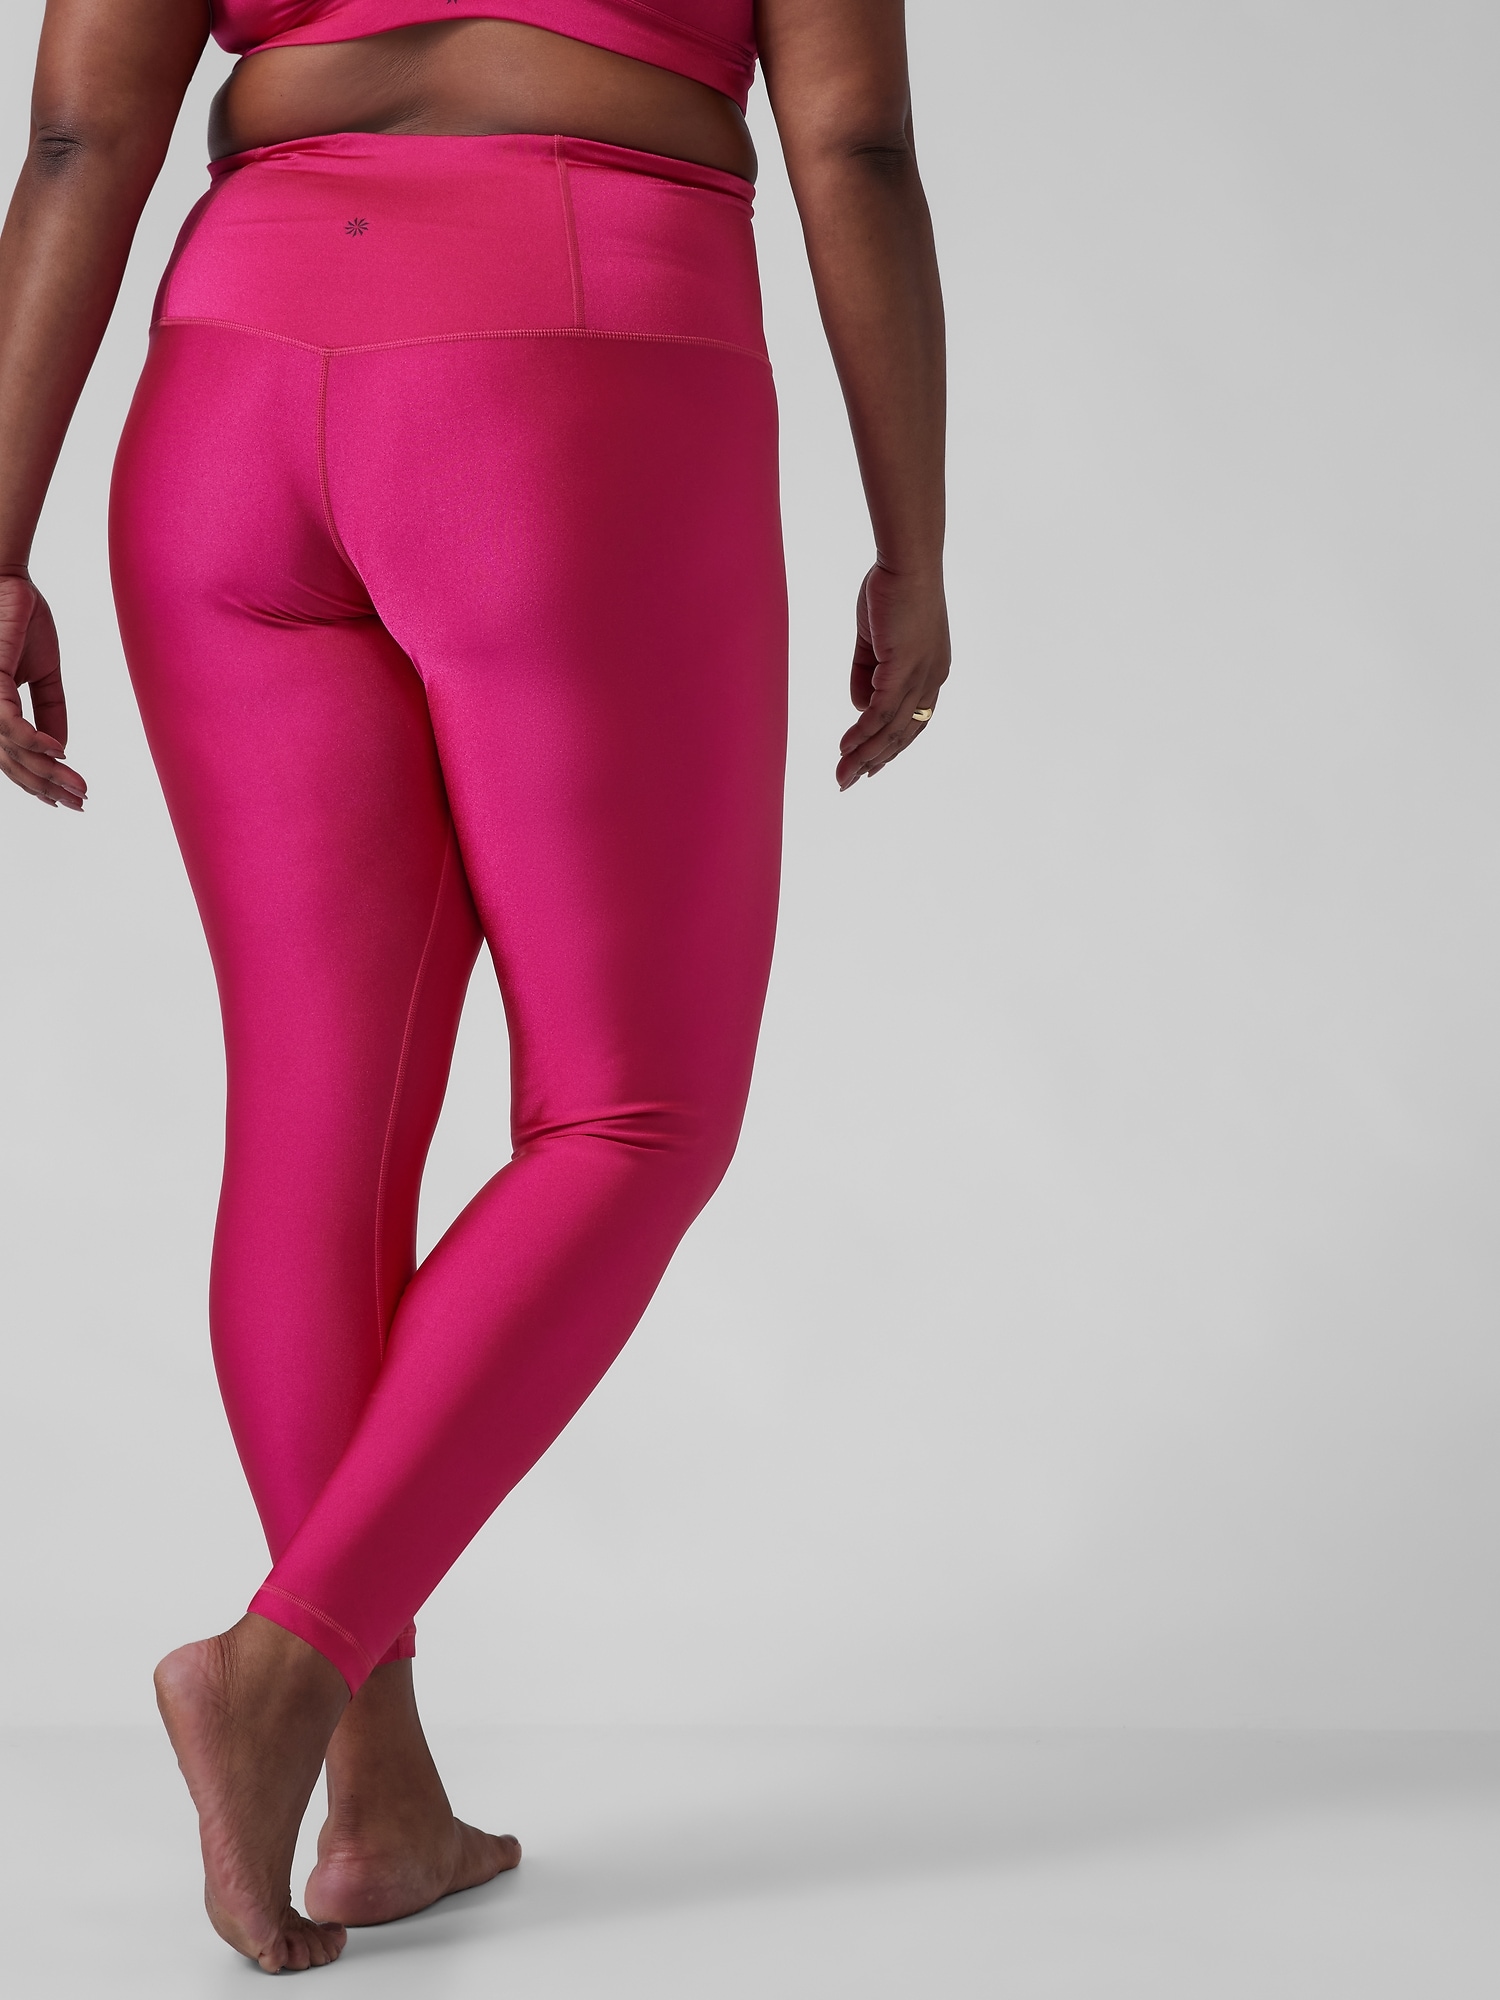 Athleta Elation Shimmer Tight Leggings Mocha Latte Blush Pink Women's Small